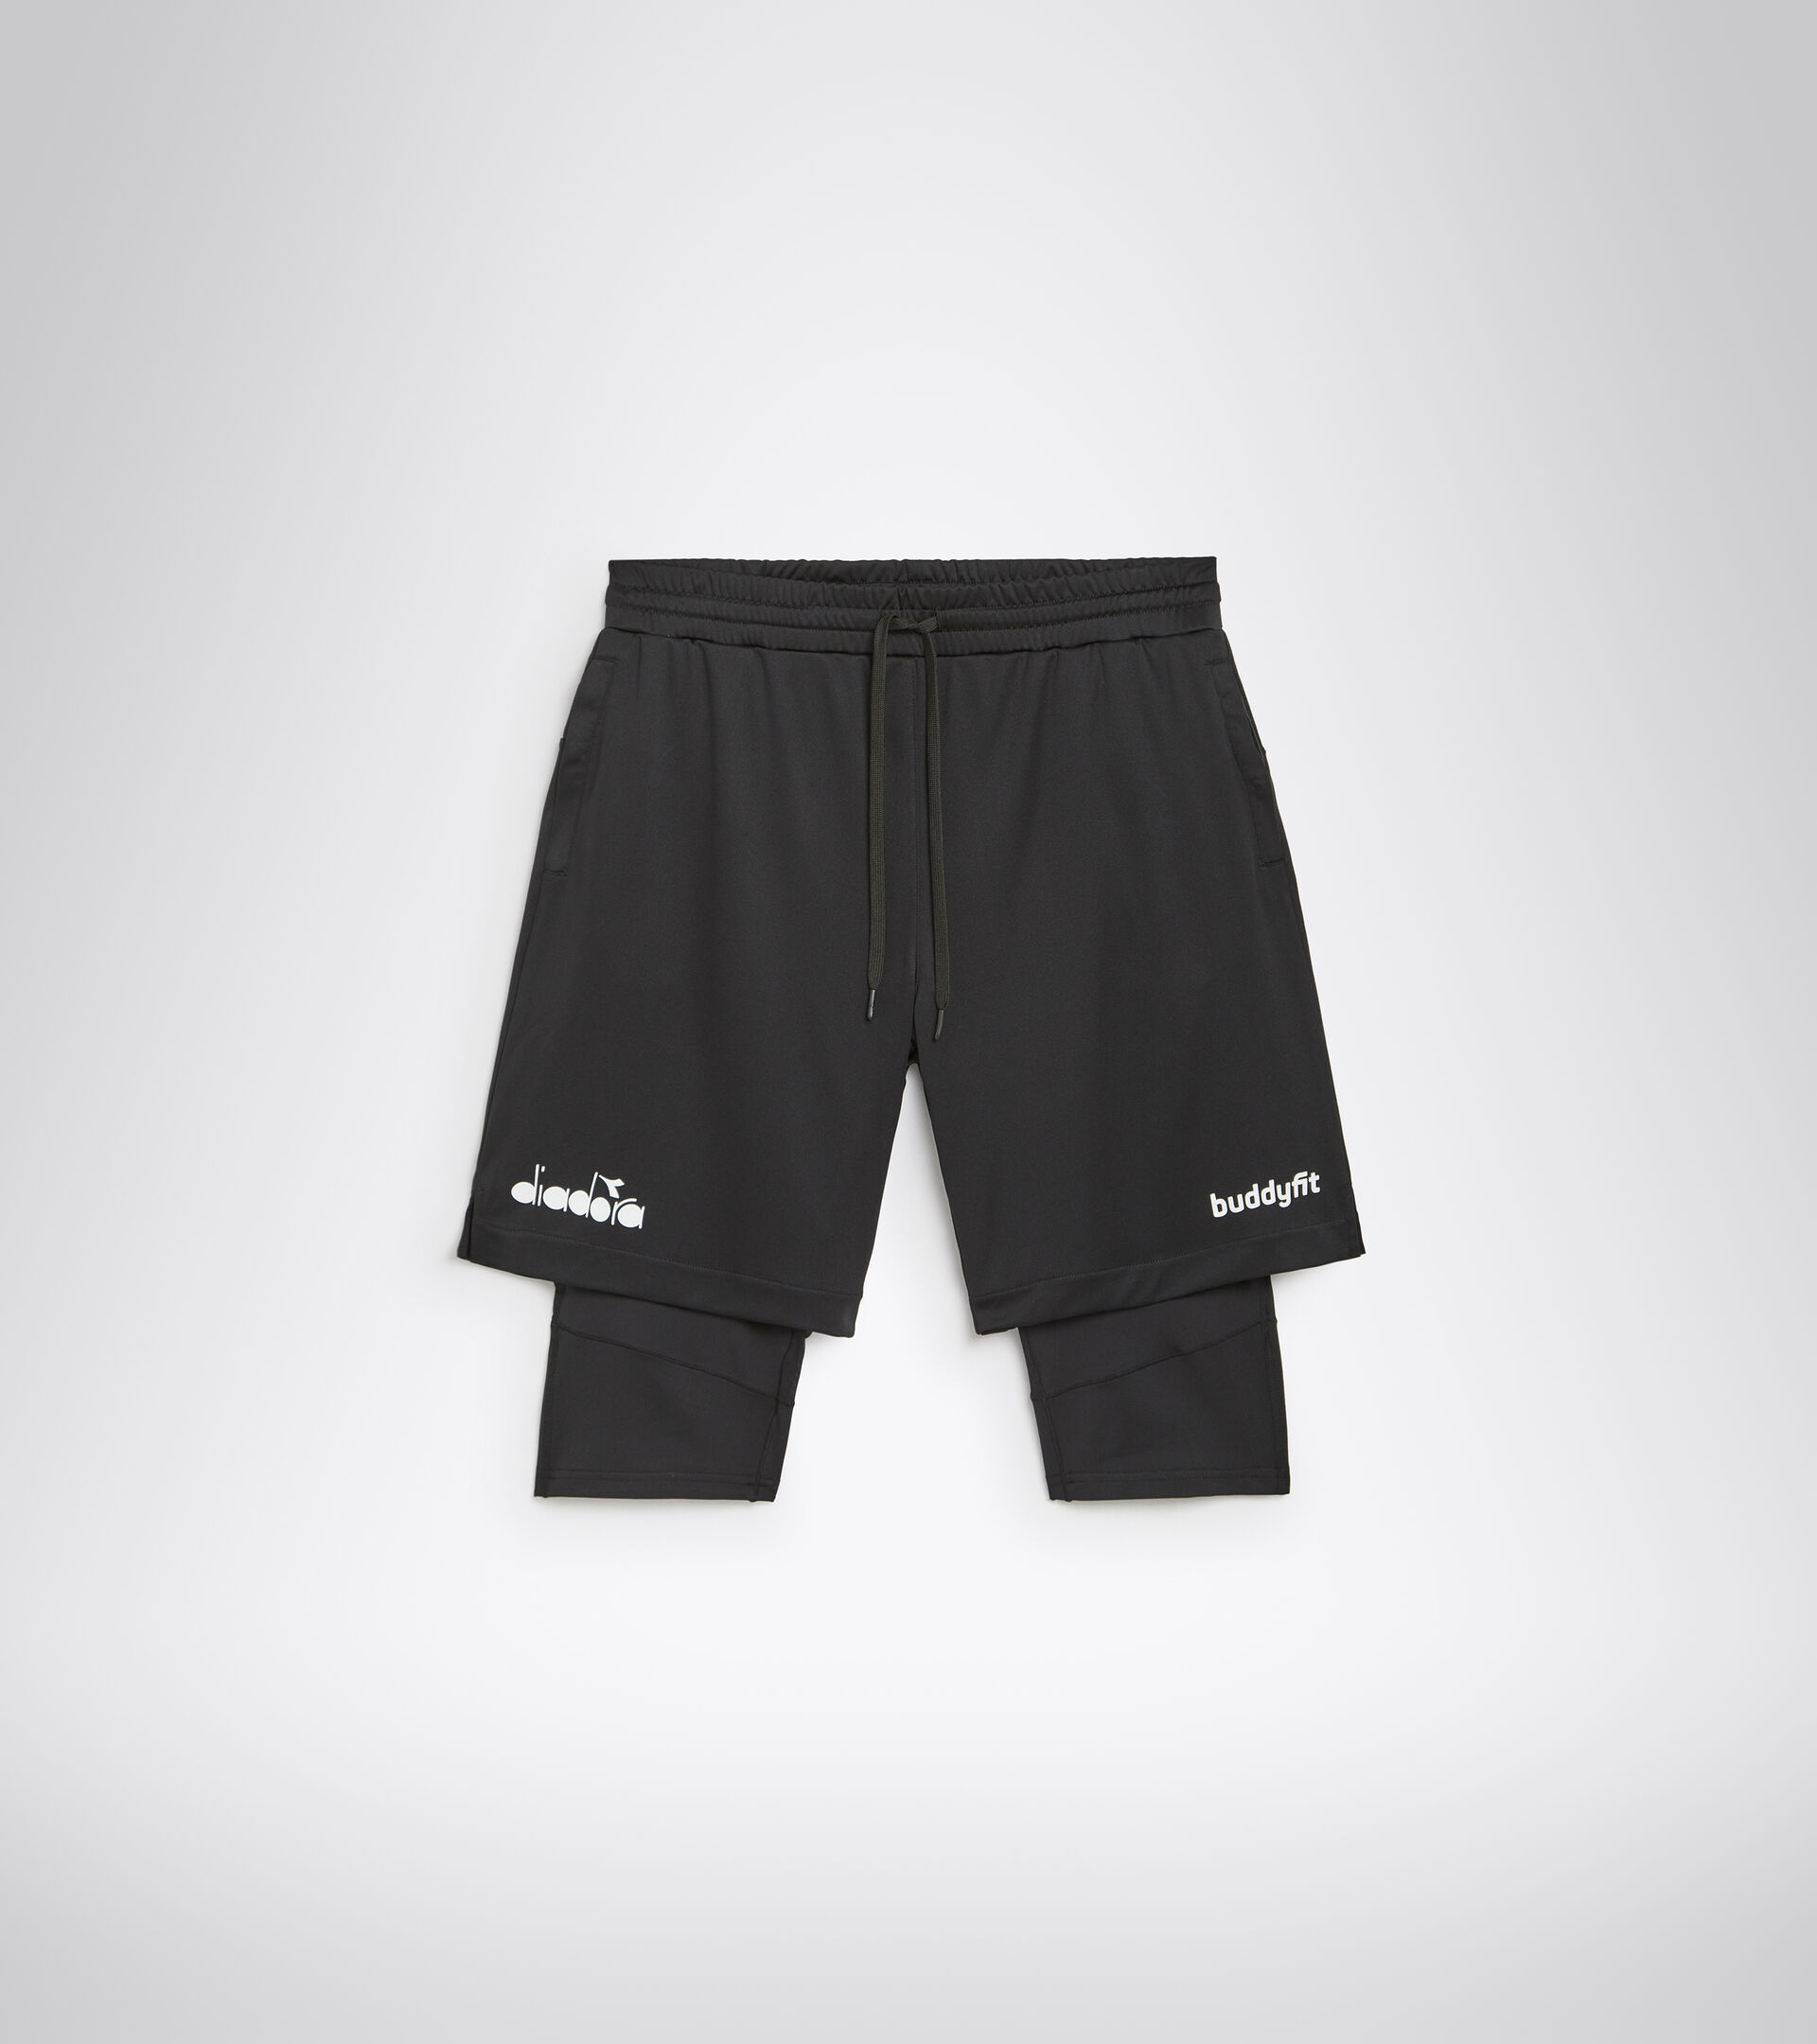 Training shorts and tights - Men’s POWER SHORTS BUDDYFIT BLACK - Diadora